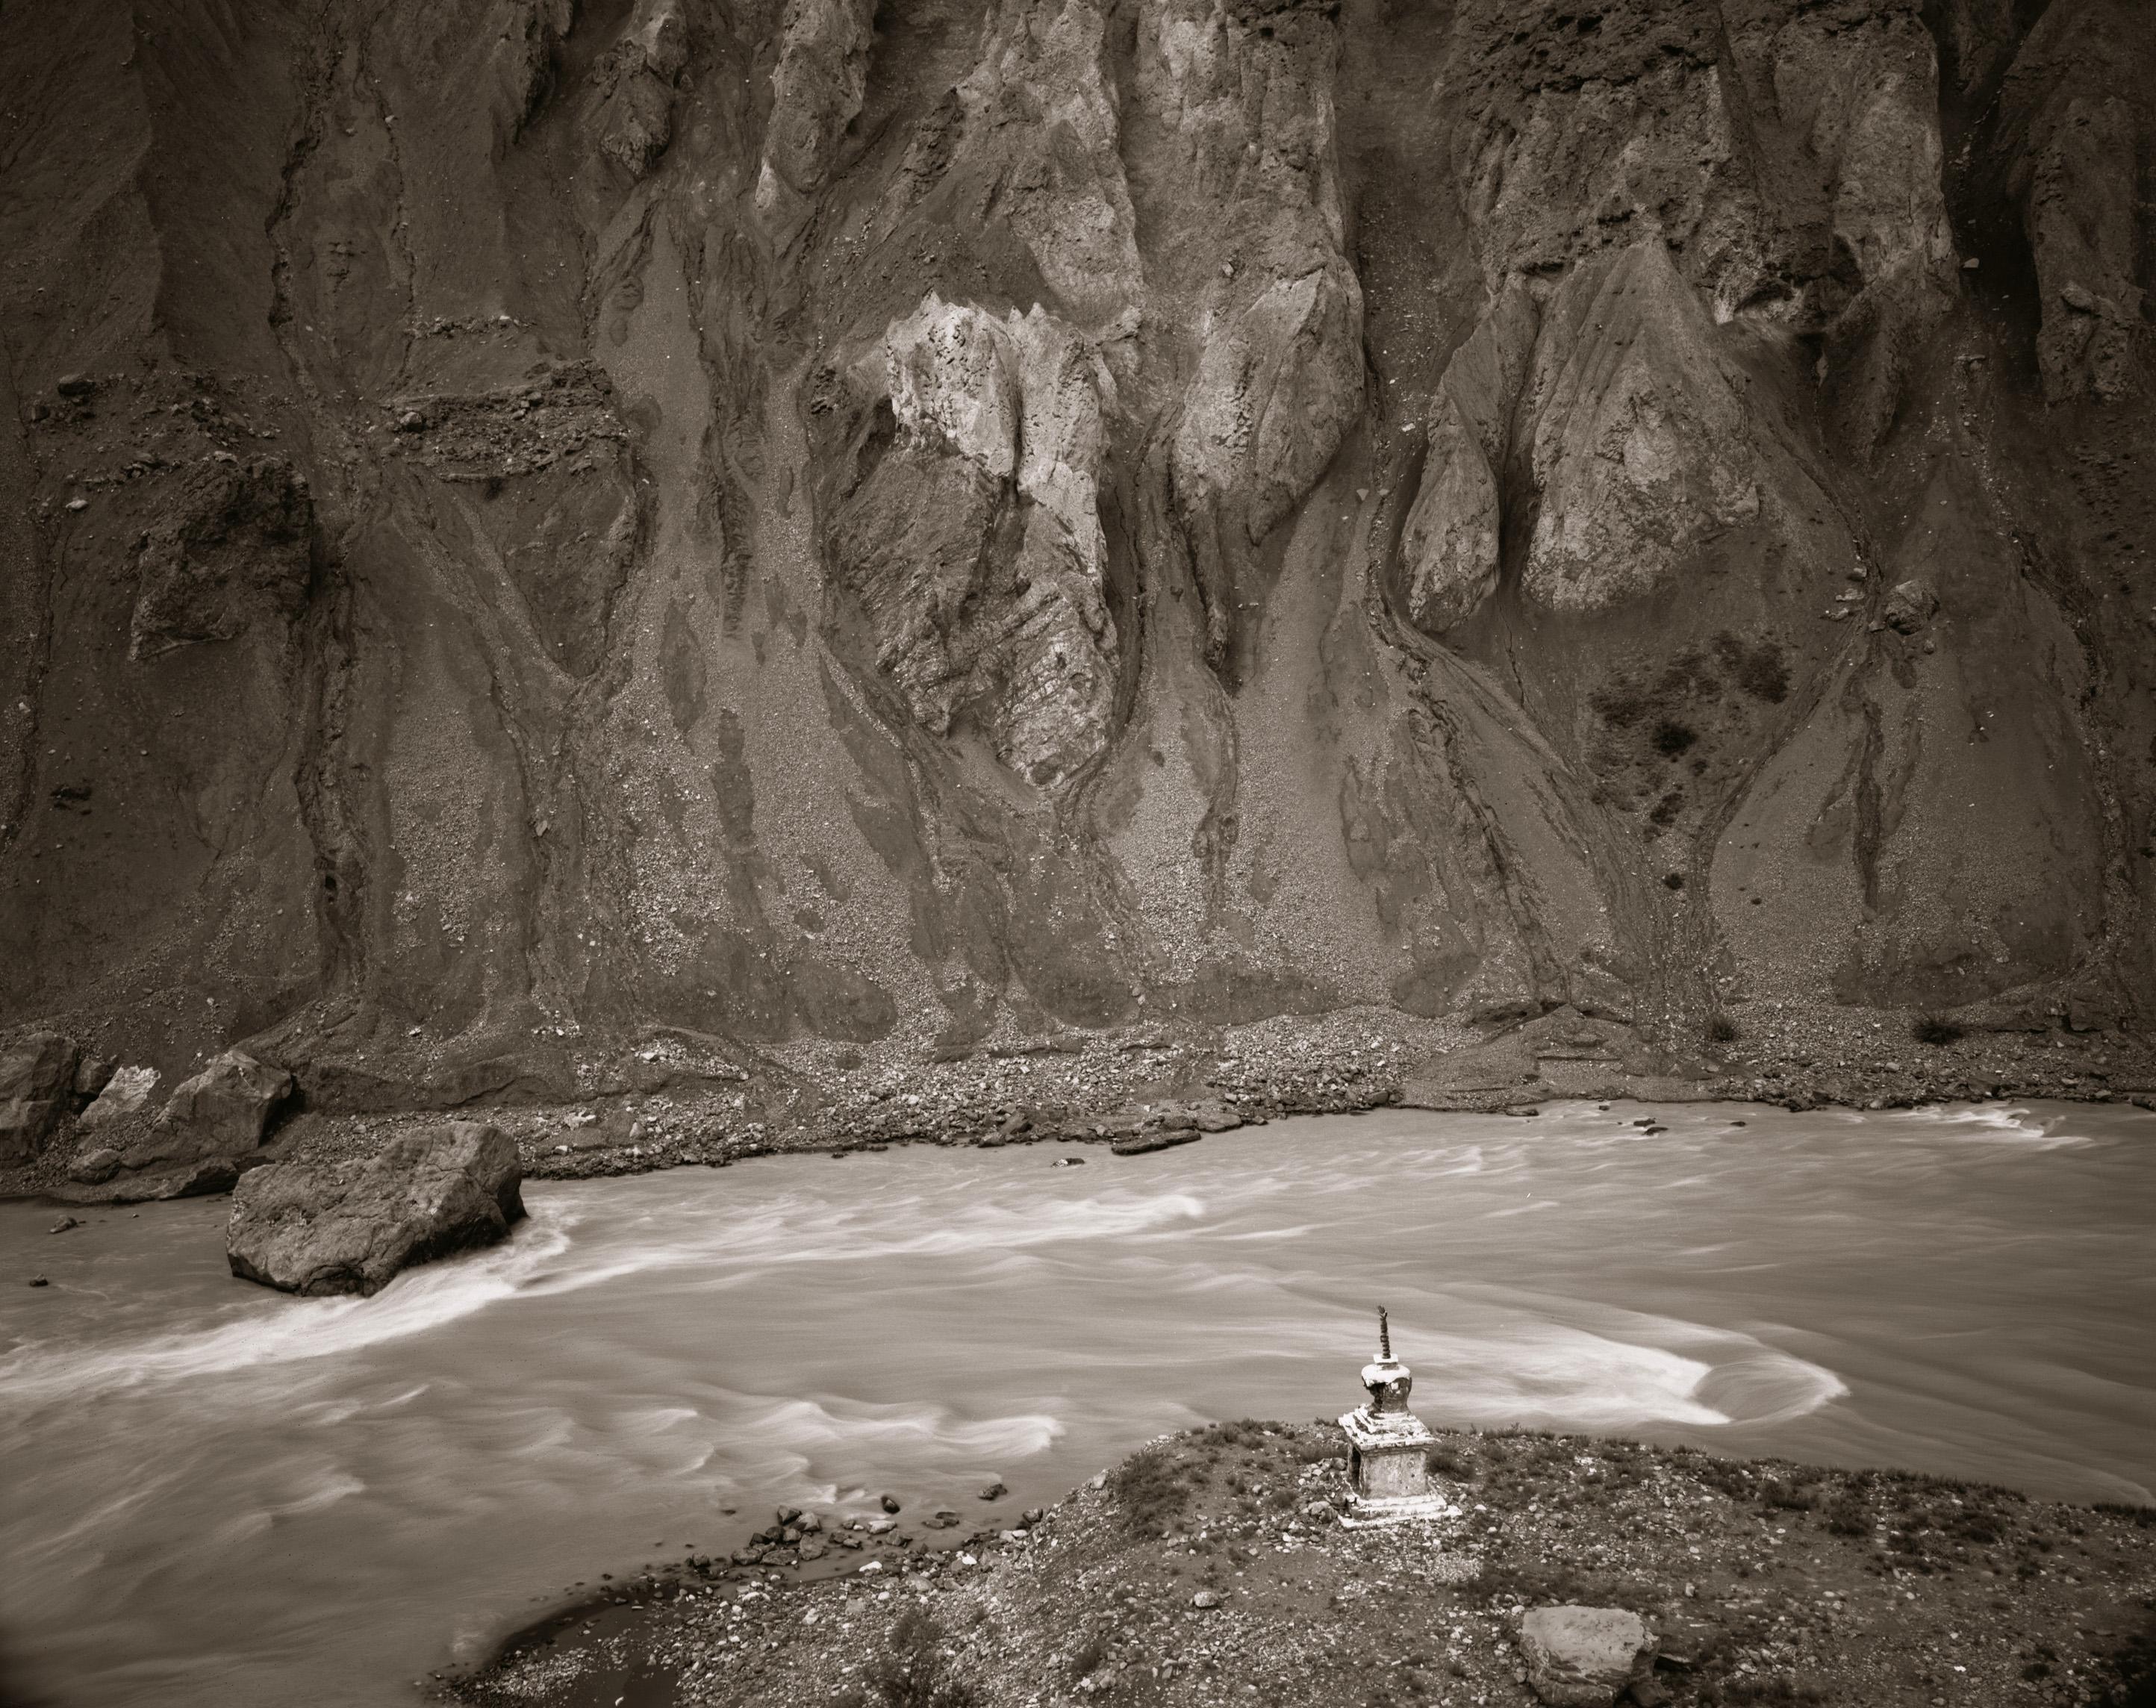 Linda Connor Black and White Photograph - Indus River with Chorten, Ladakh, India